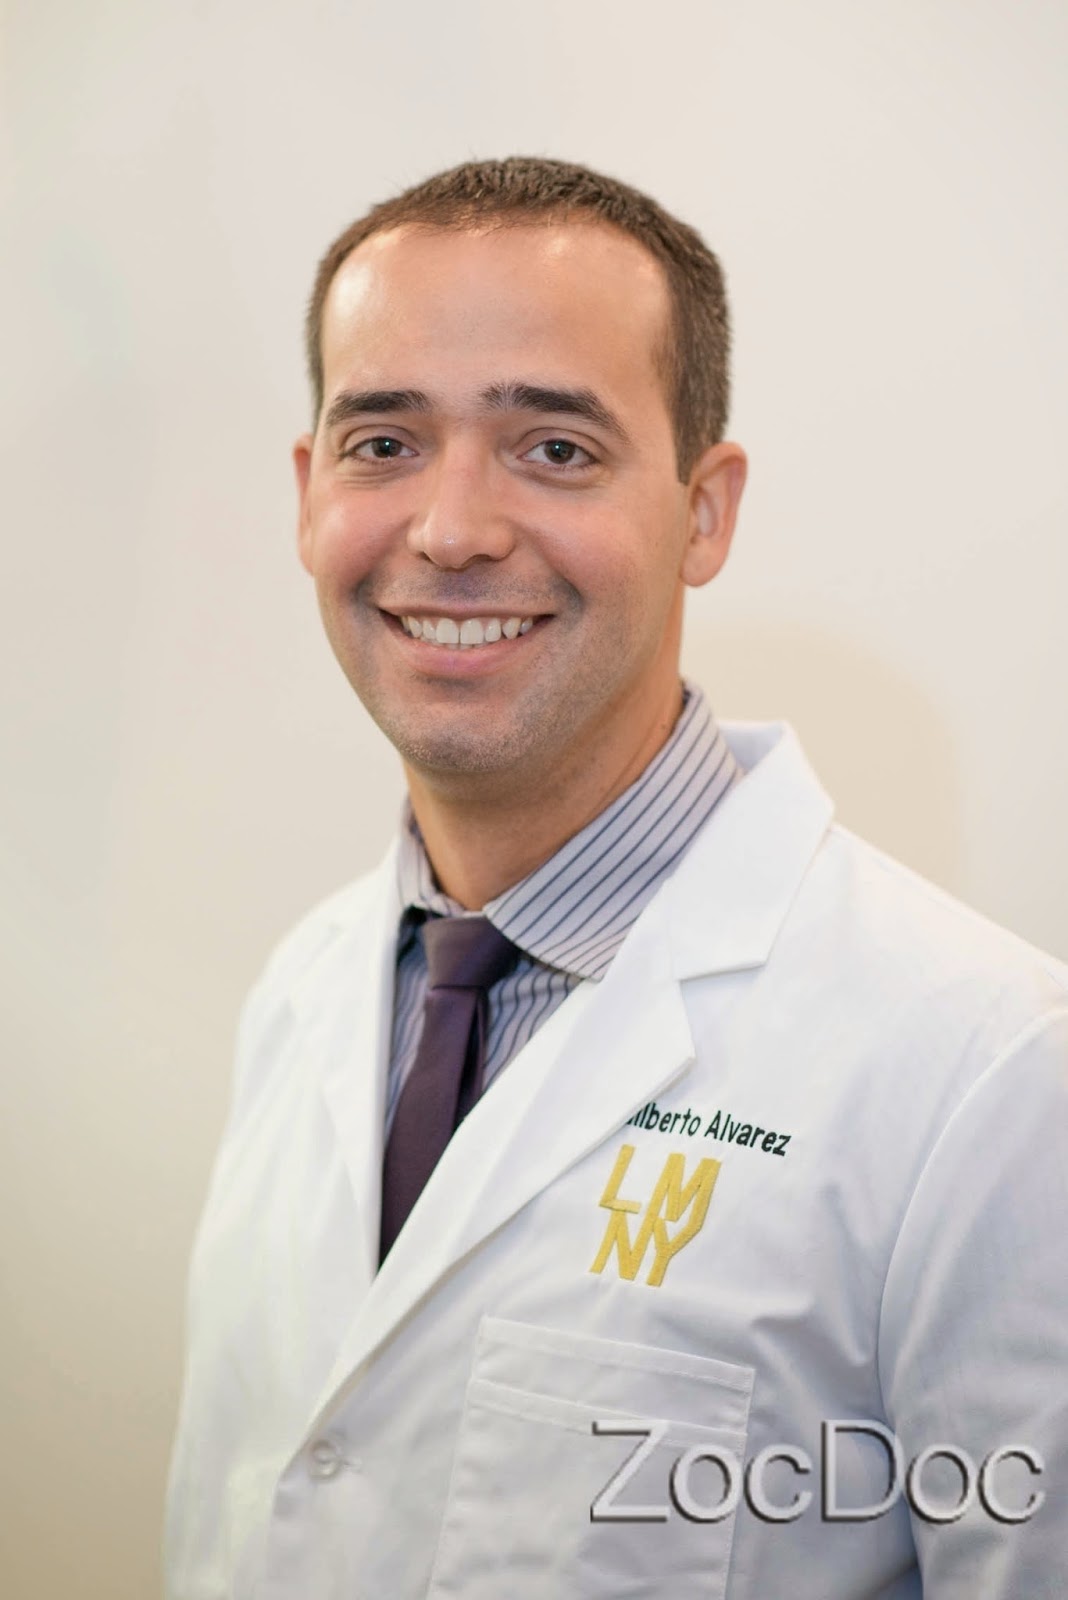 Photo of Dr. Gilberto Alvarez del Manzano in New York City, New York, United States - 6 Picture of Point of interest, Establishment, Health, Doctor